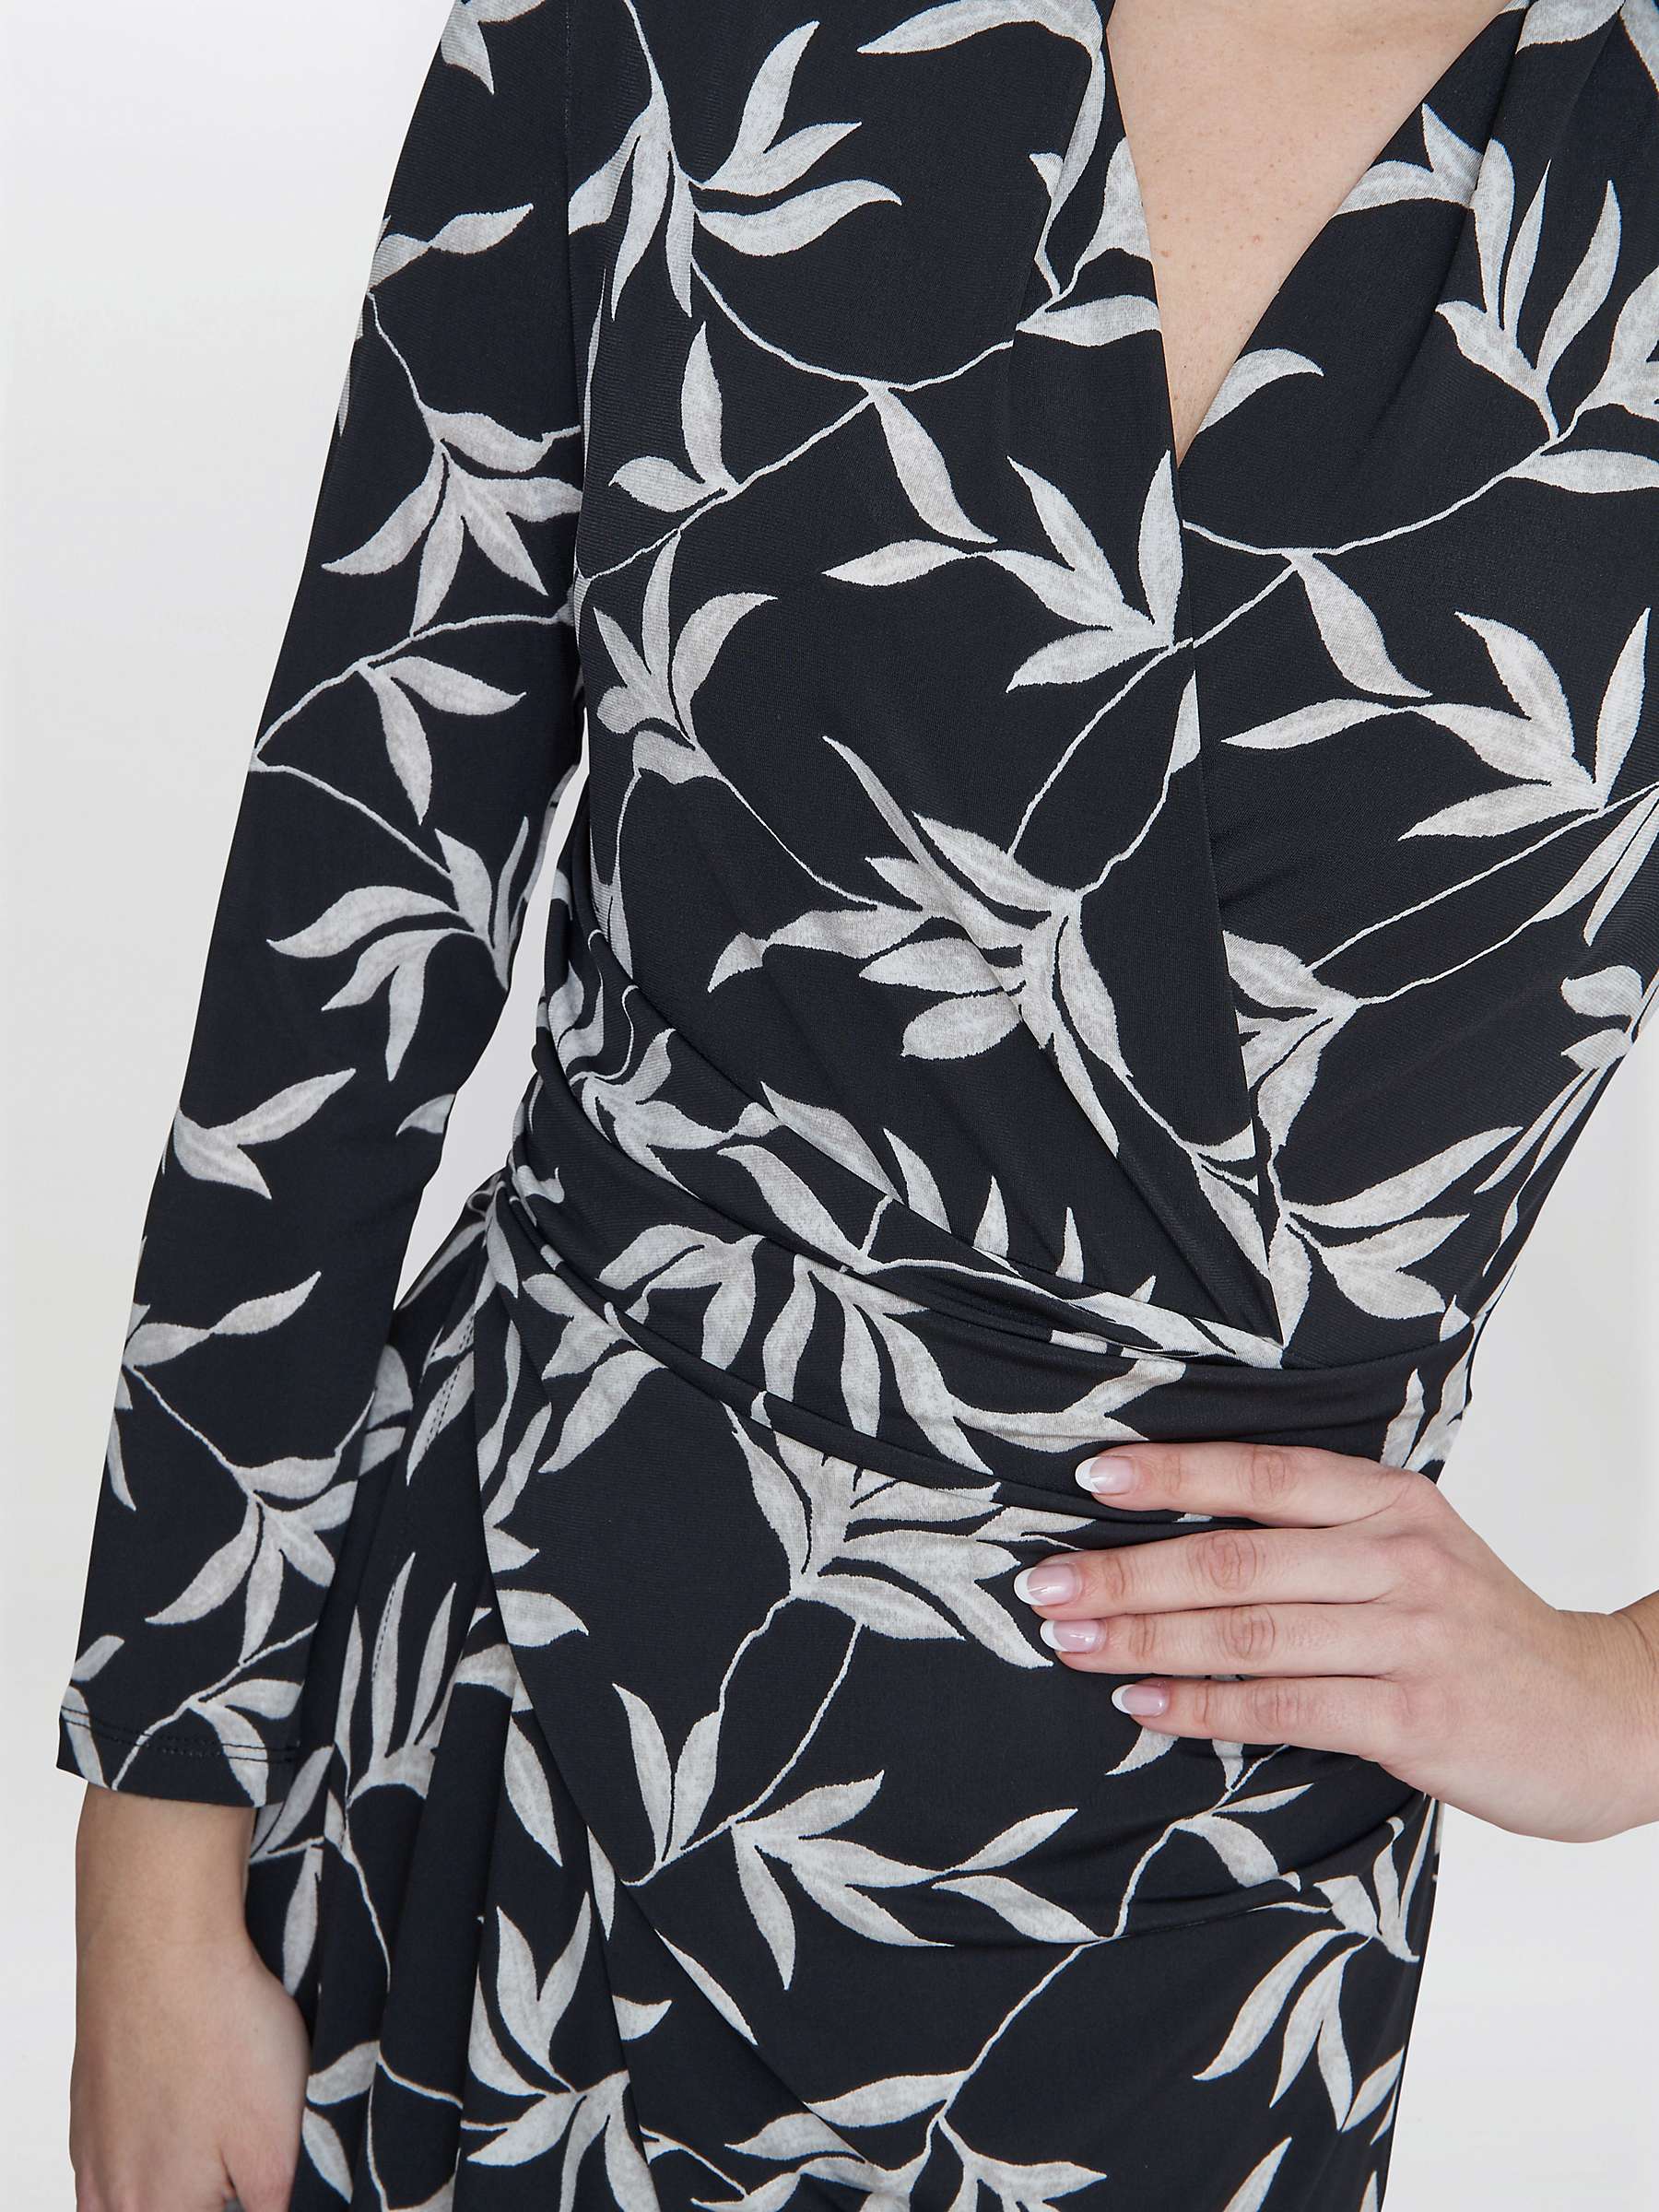 Buy Gina Bacconi Jade Jersey Wrap Maxi Dress, Black/Off White Online at johnlewis.com